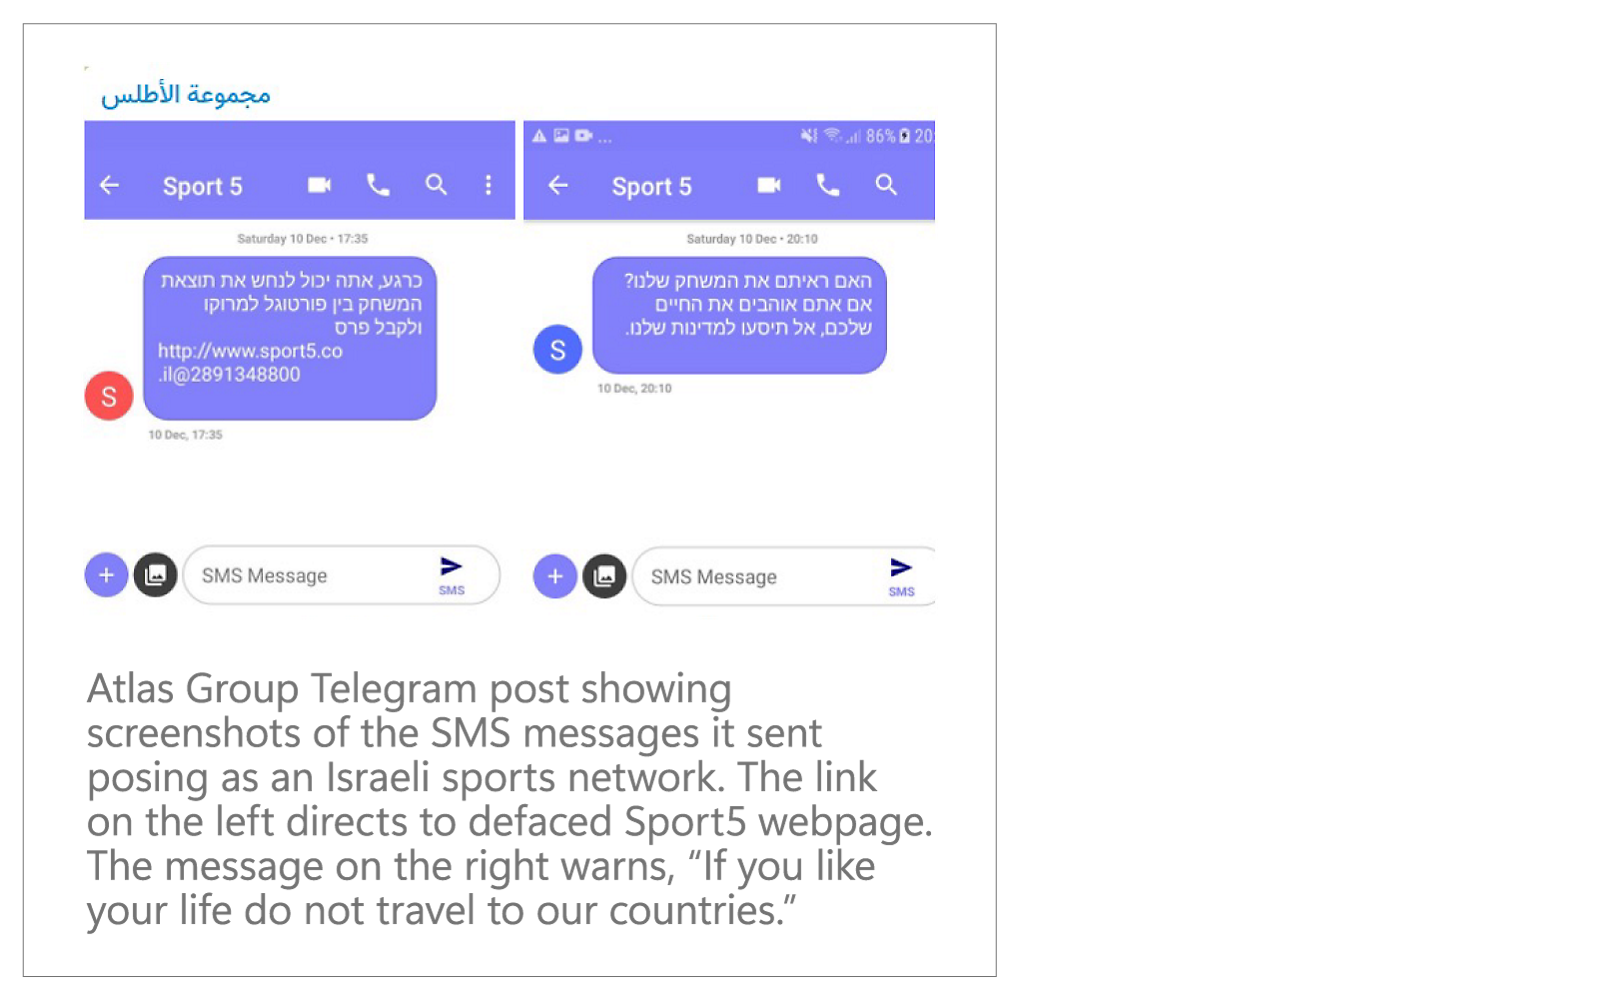 Atlas Group Telegram: Screenshots of SMS posing as Israeli sports network.